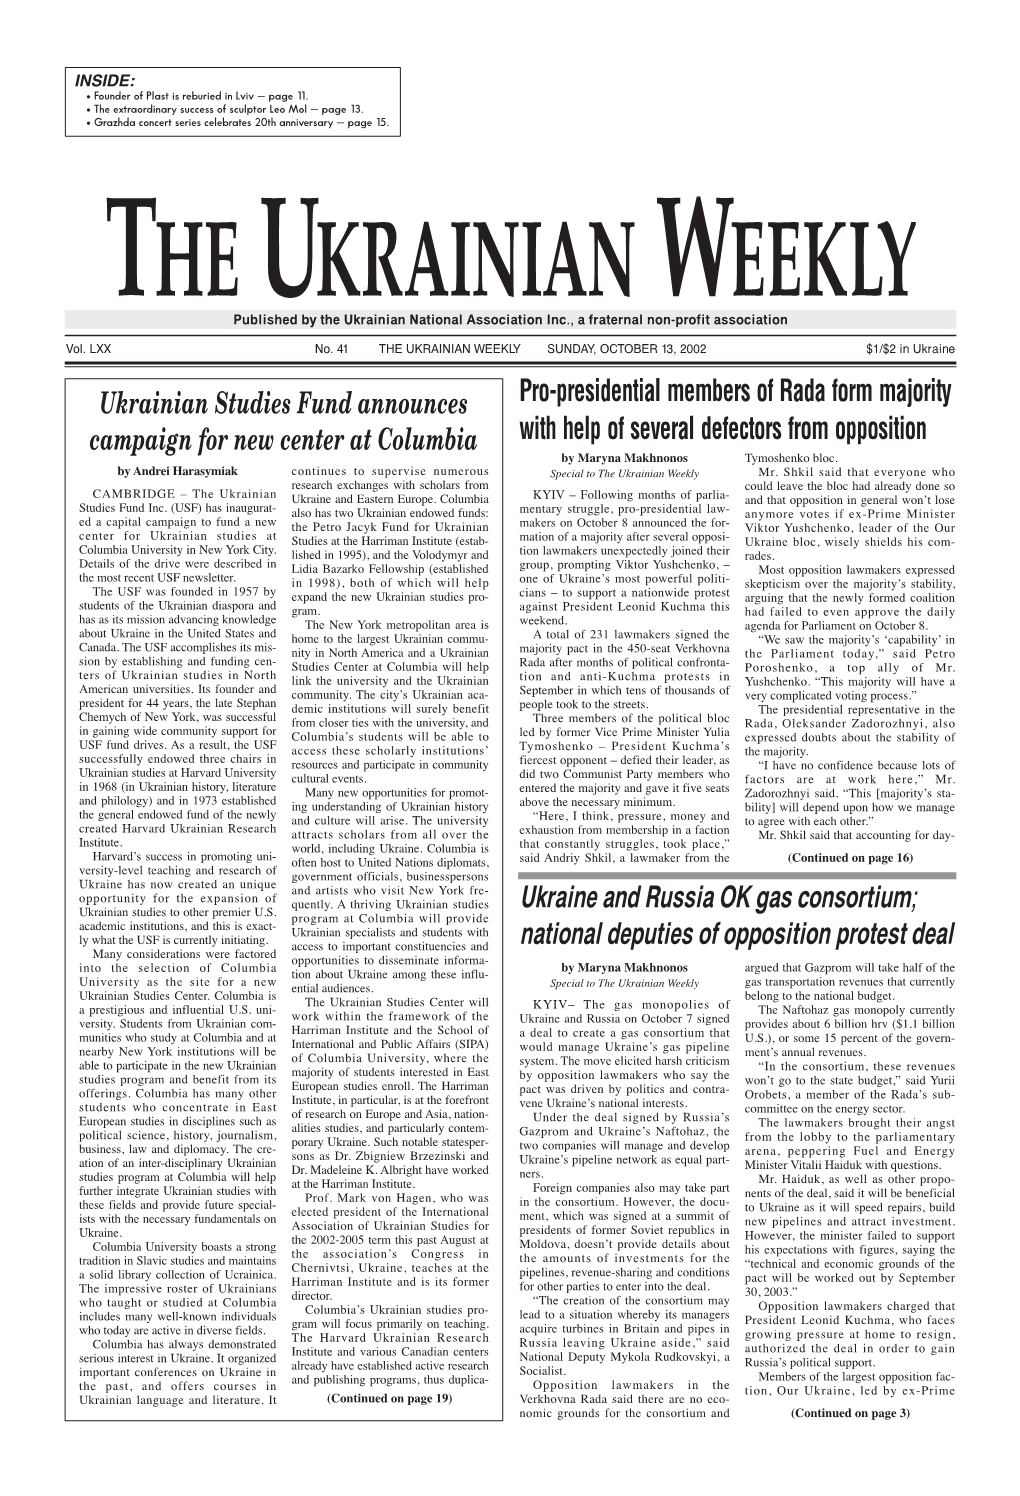 The Ukrainian Weekly 2002, No.41